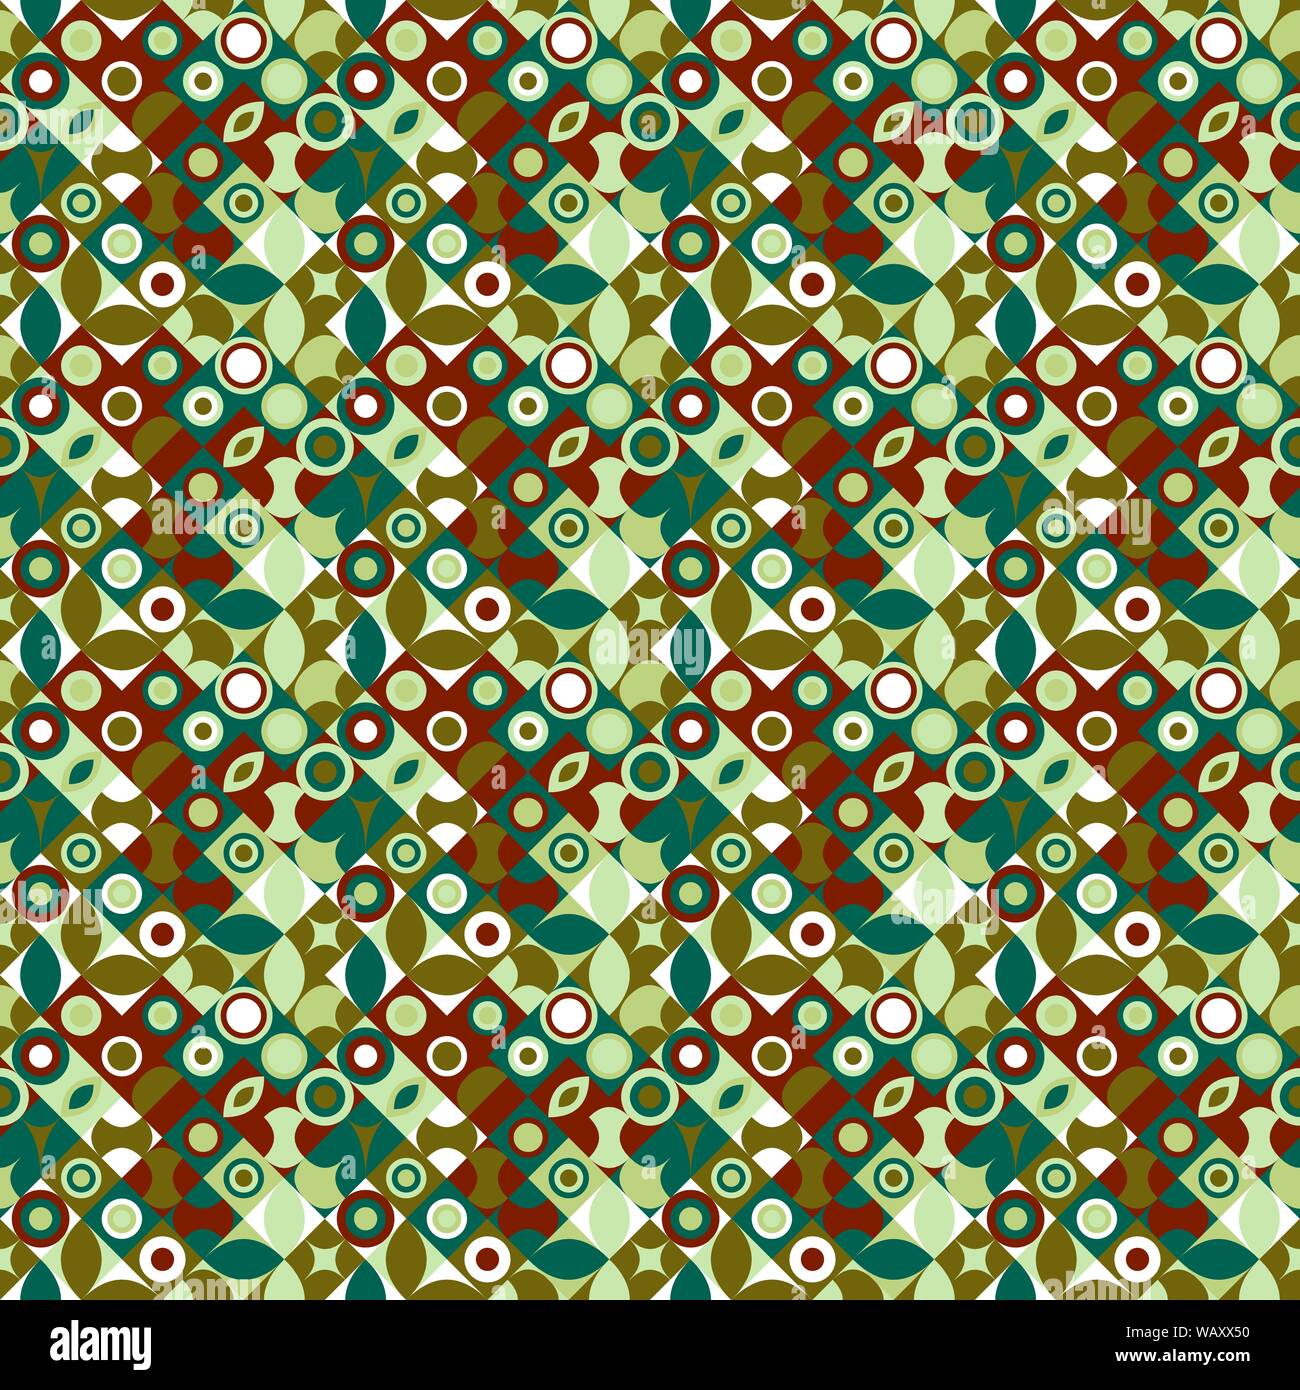 Random gebogene Form Muster Hintergrund - abstrakte farbenfrohe Vektorgrafik Stock Vektor